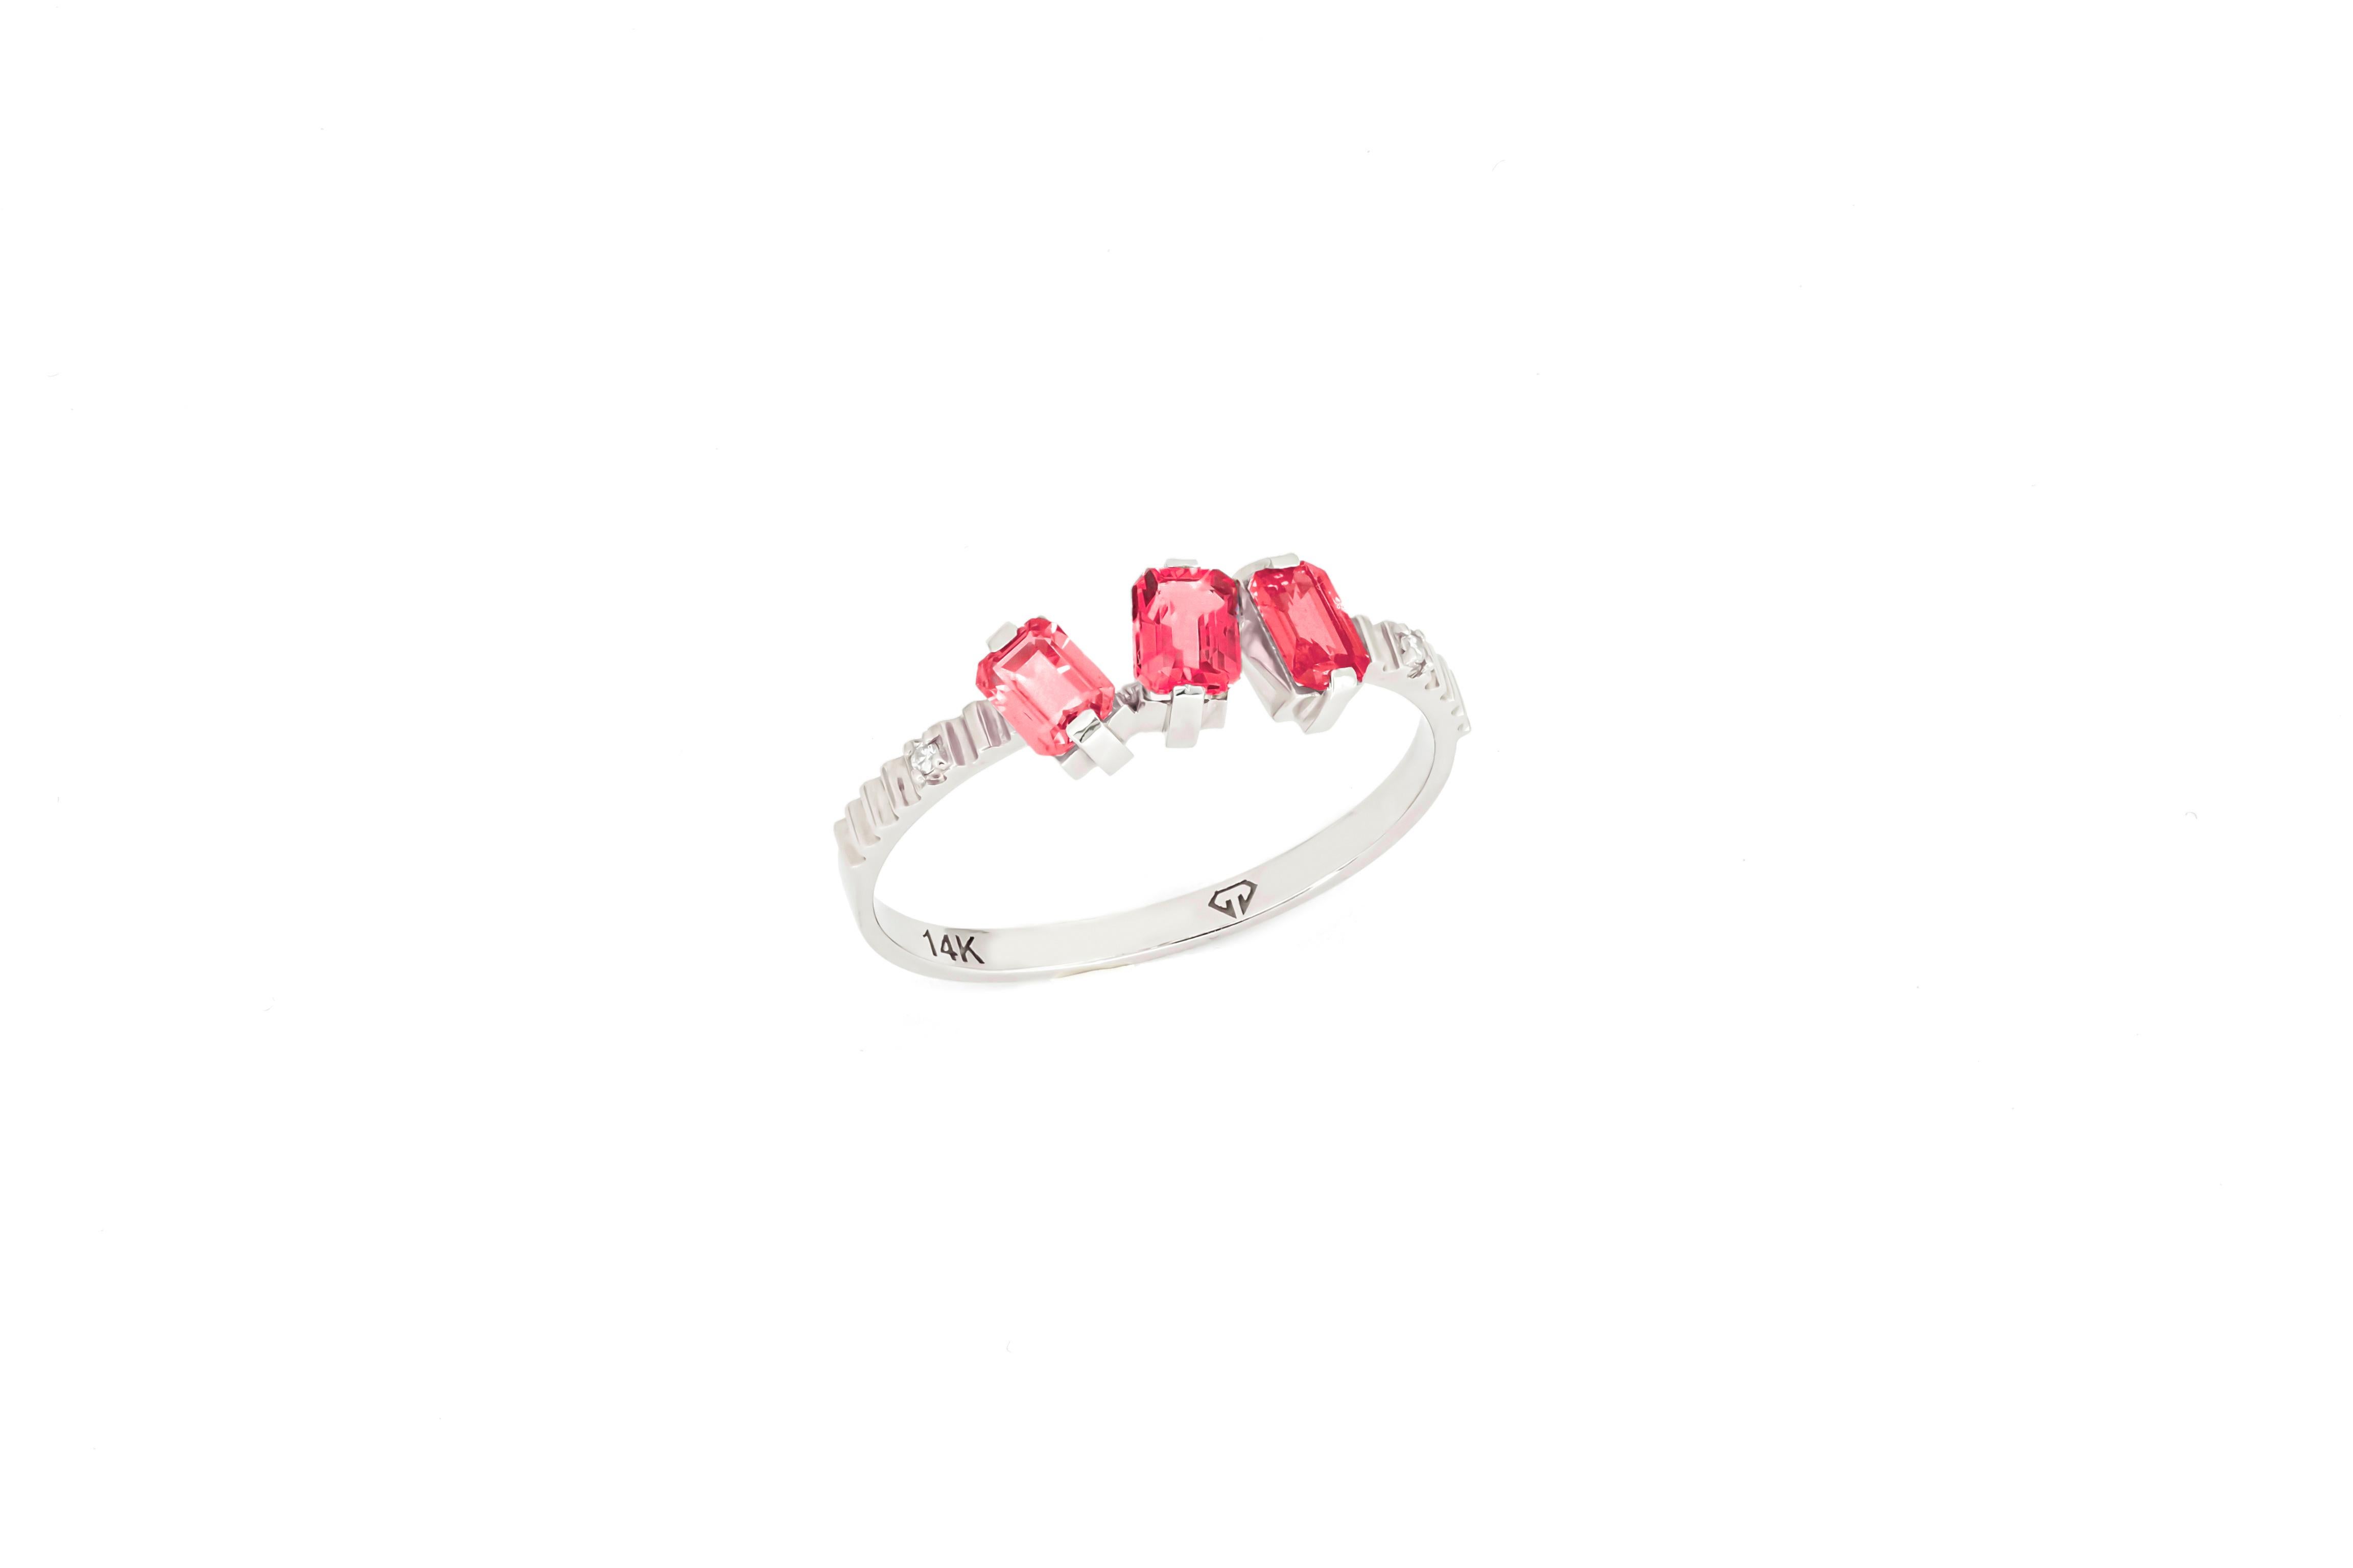 Women's Monochrome red gemstone 14k ring.  For Sale